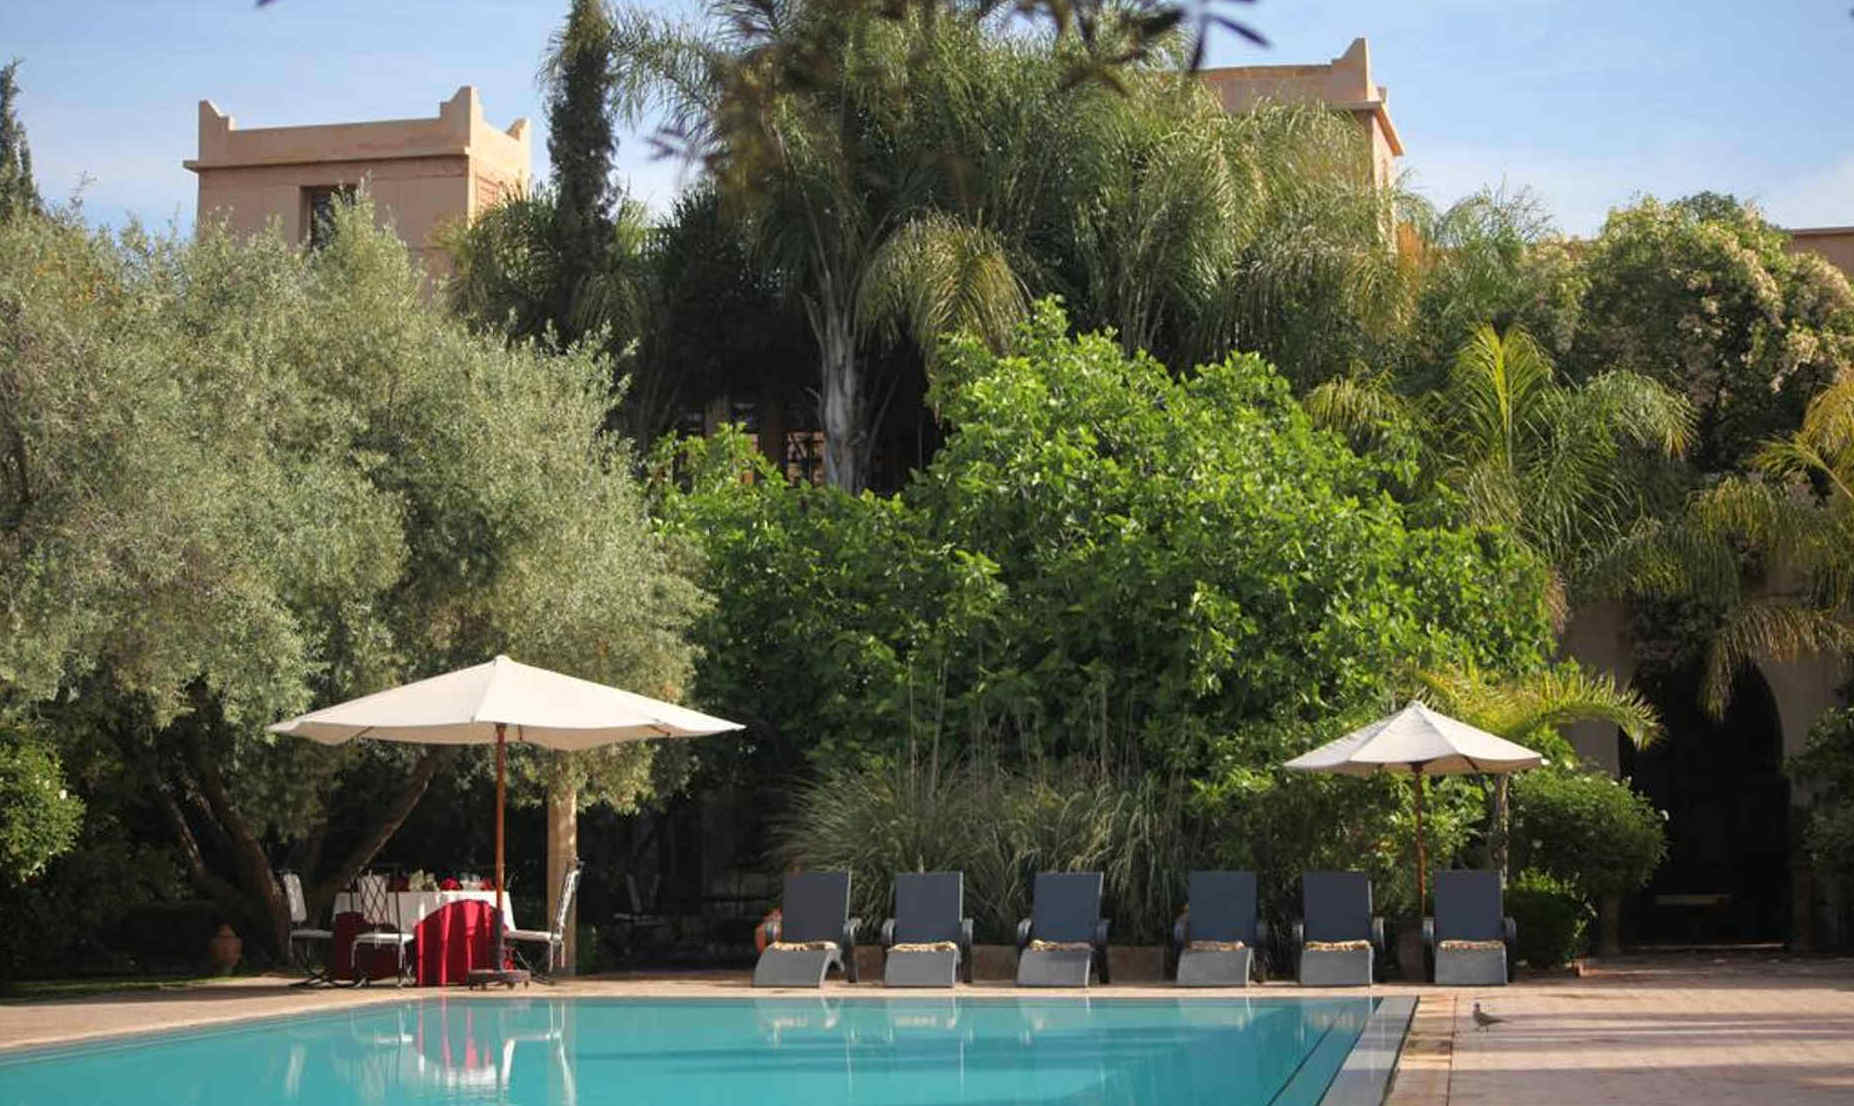 Piscine La Maison Arabe - Hôtel Marrakech, Maroc